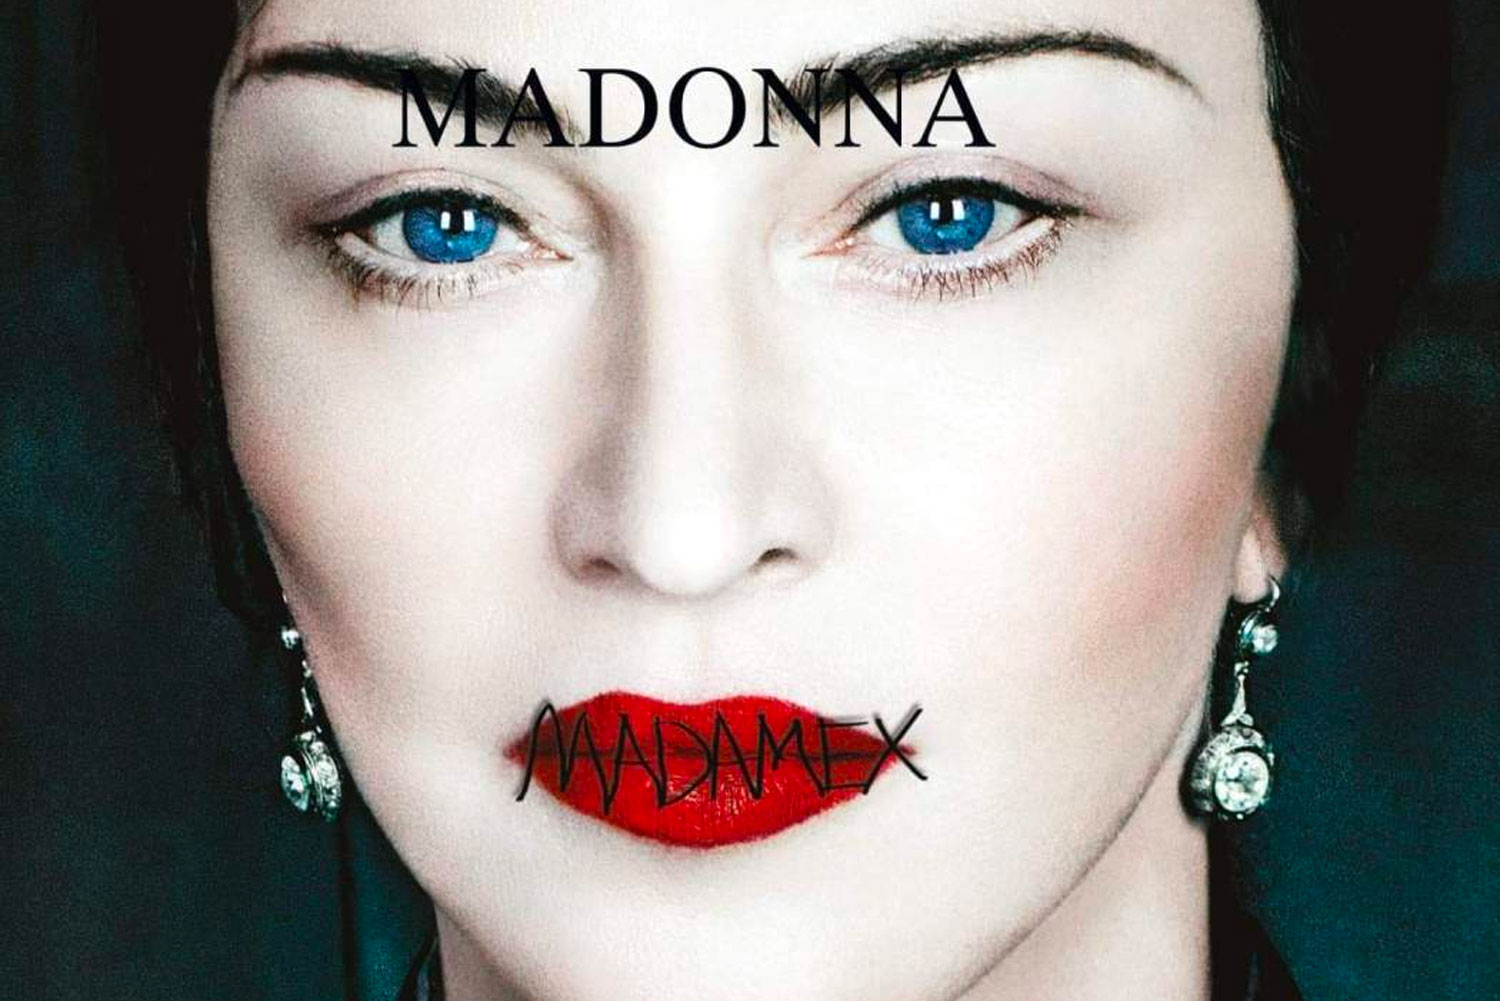 Madonna Maluma Medellín Cha cha cha